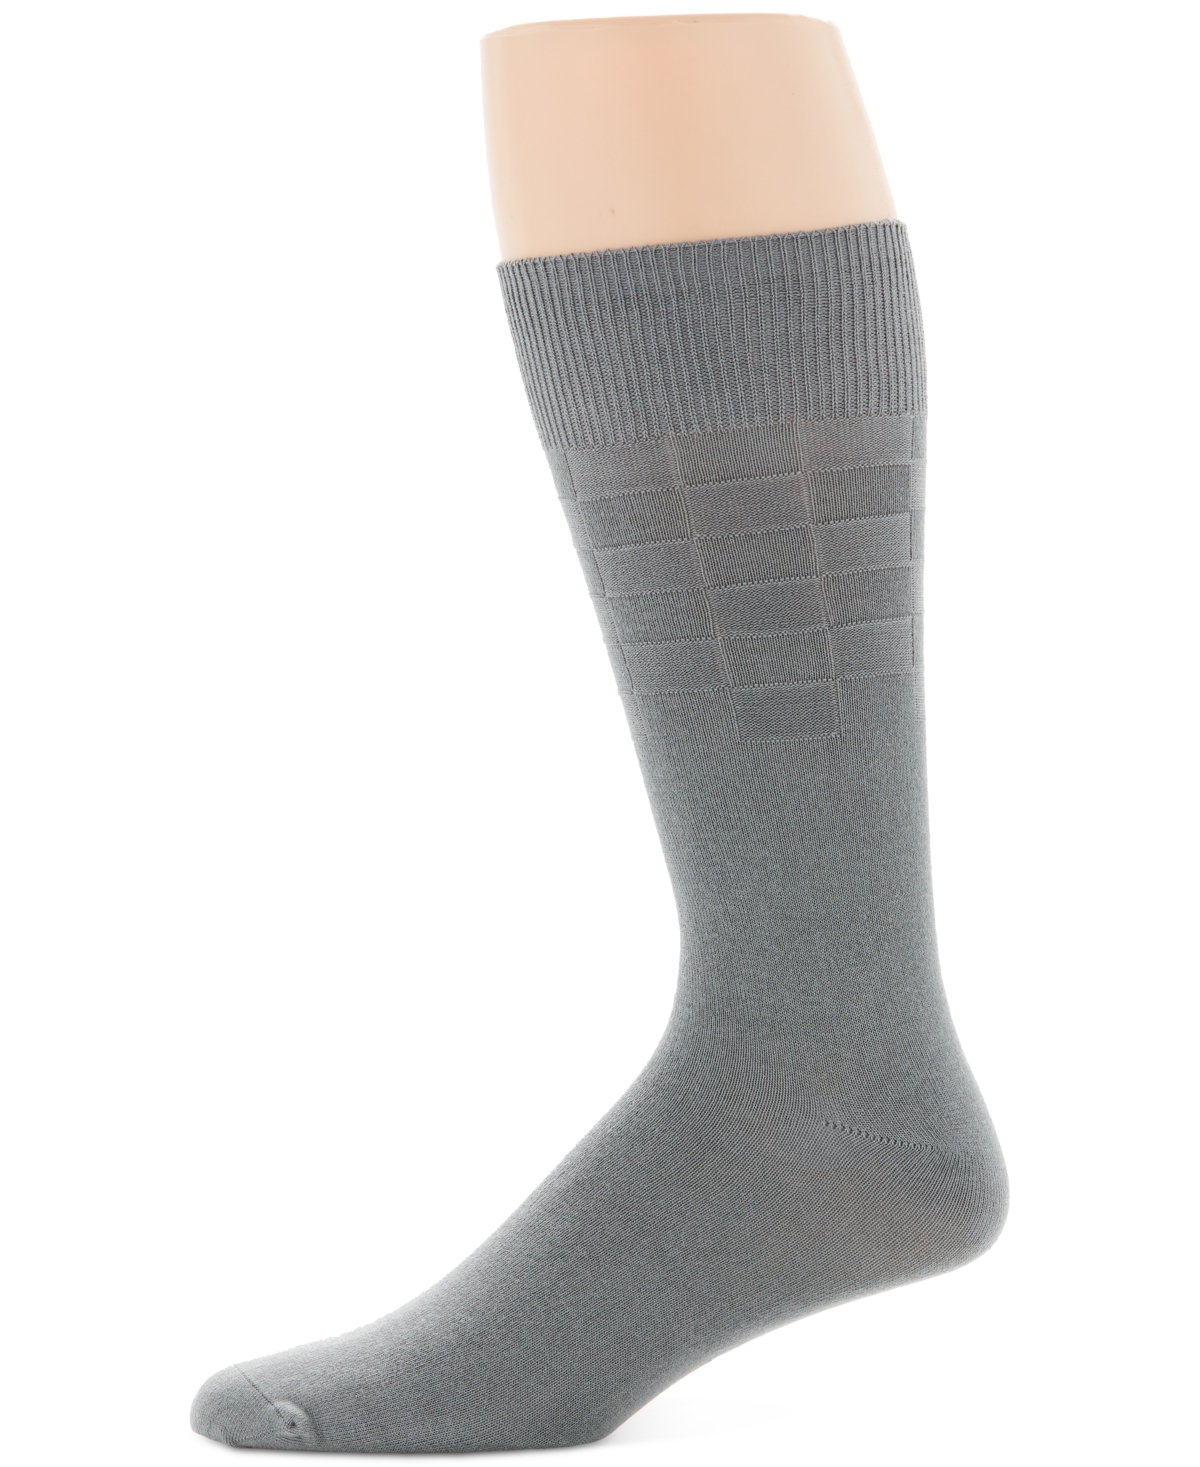 Perry Ellis Men's Socks, Single Pack Triple S Men's Socks - Tawny